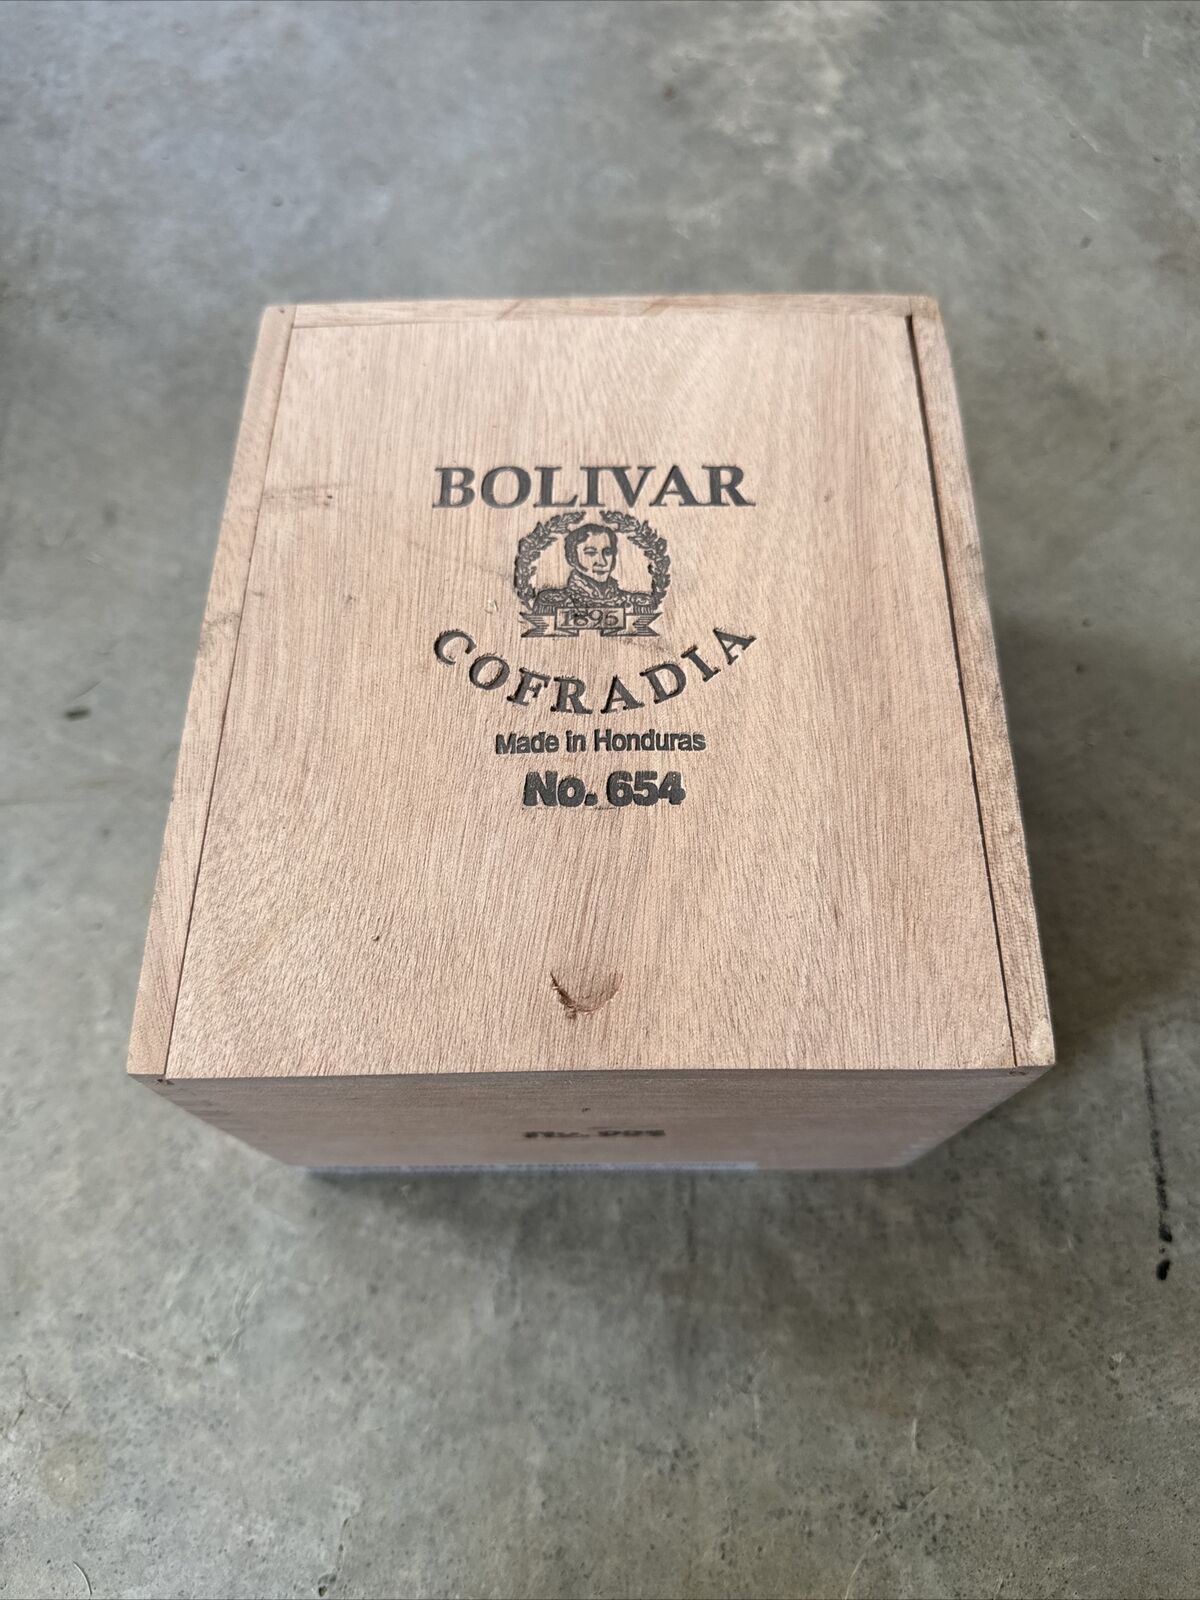 Bolivar Cofradia No. 654 Empty Wooden Cigar Box 6.75\